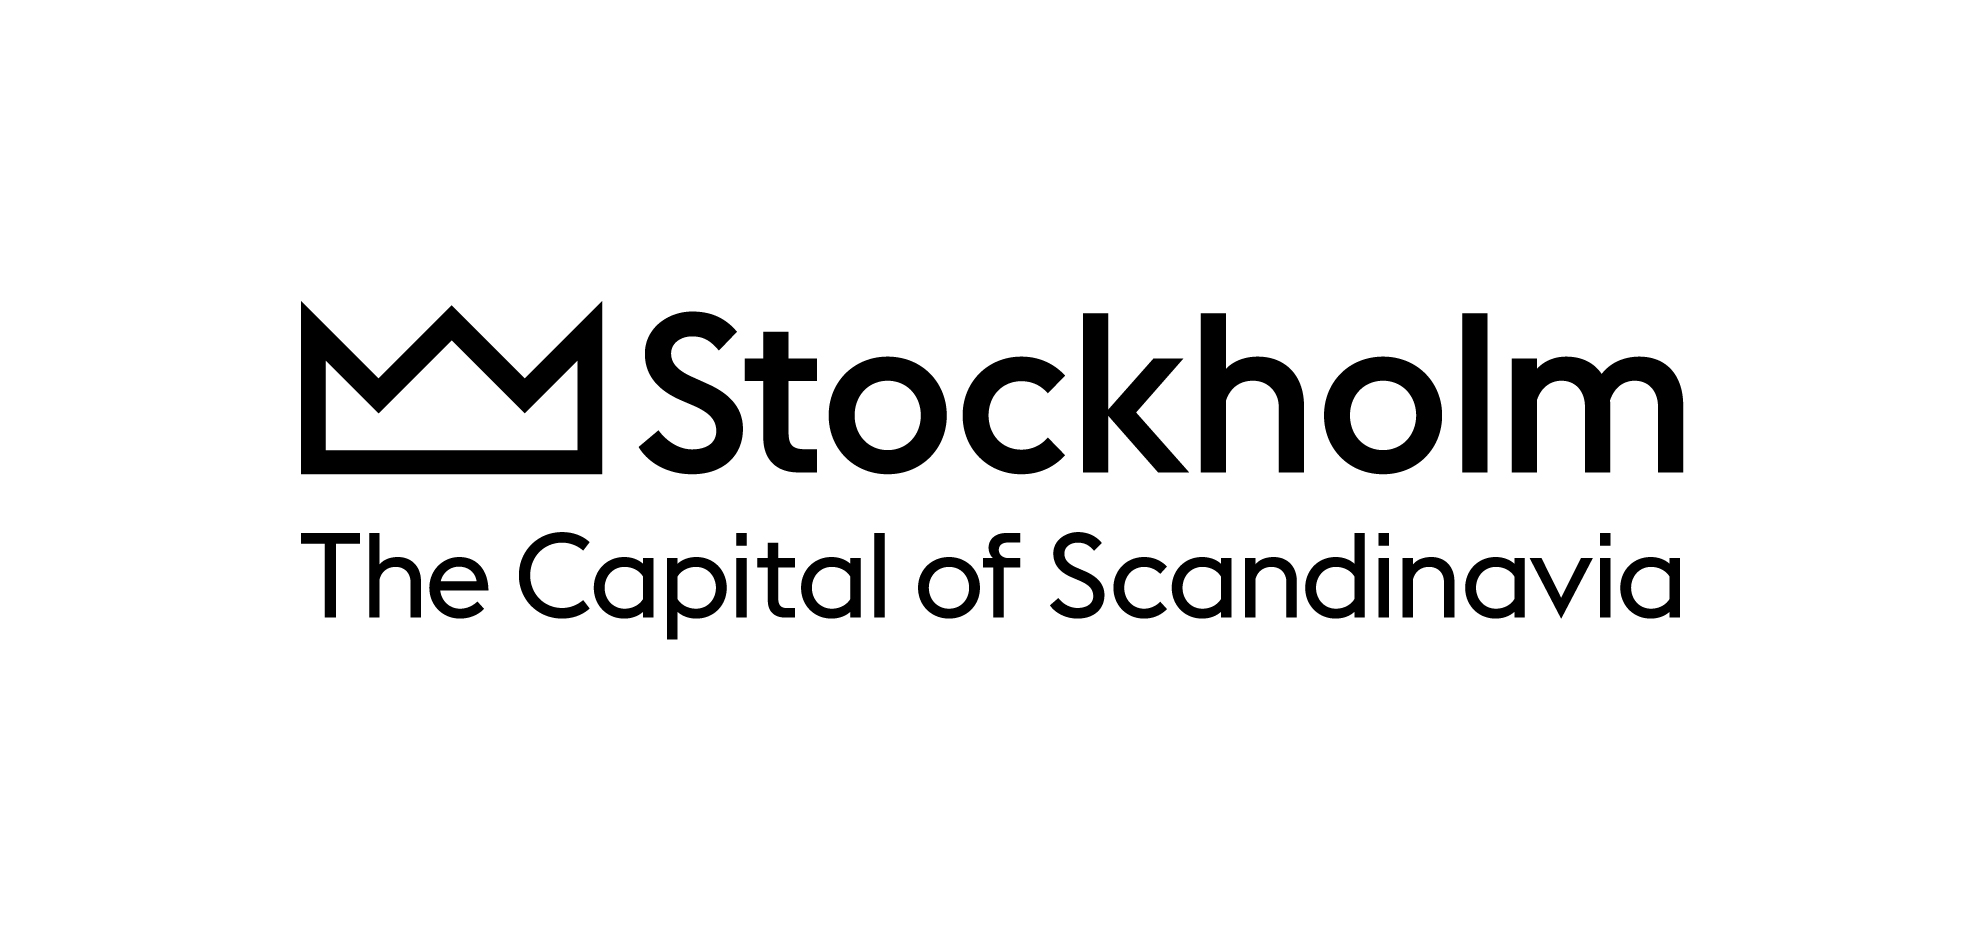 Capital of Scandinavia